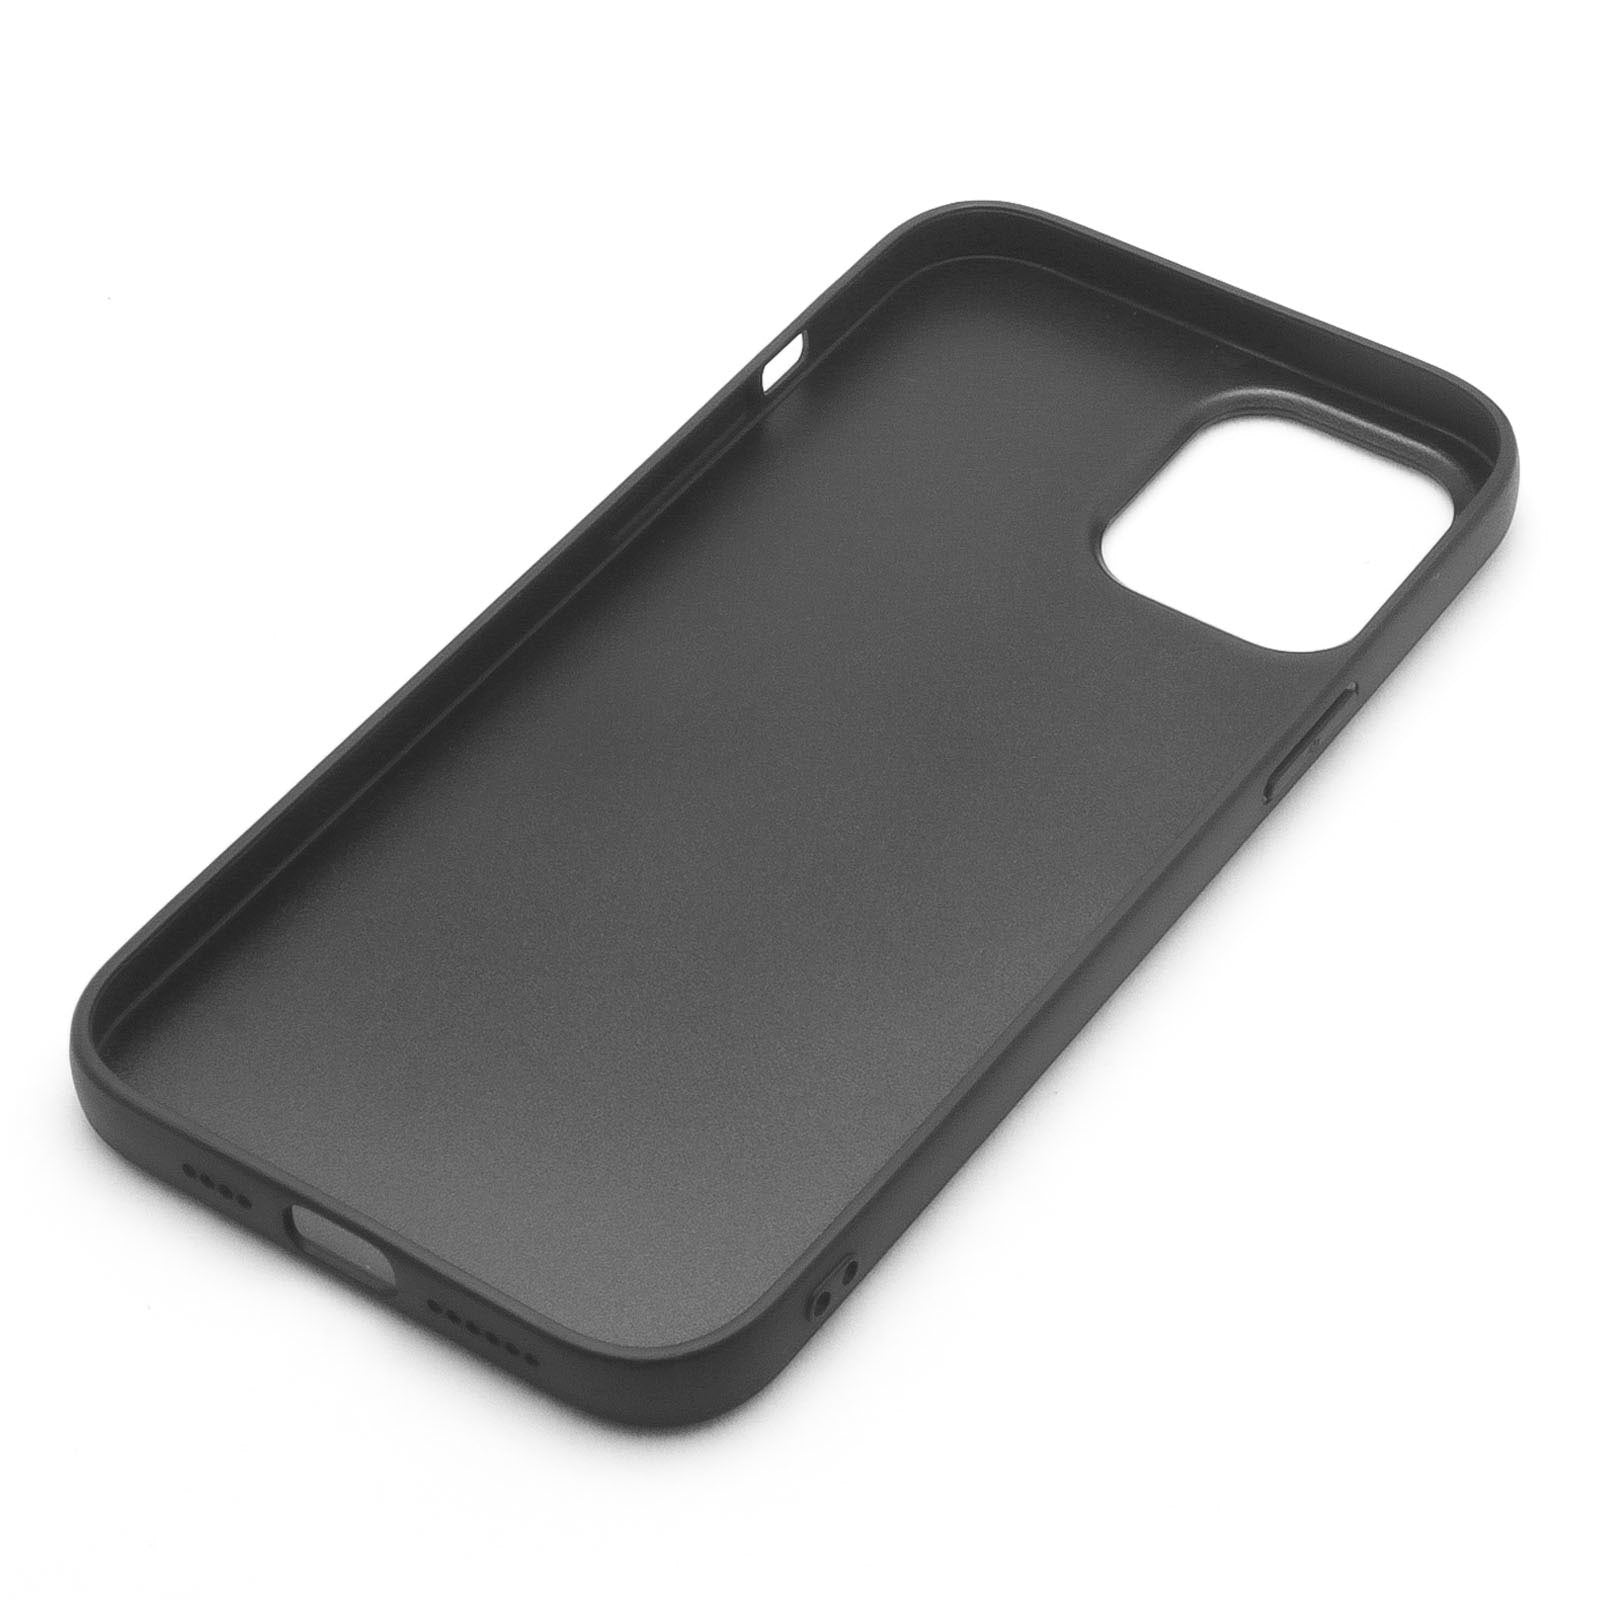 Sunyc Luxury Protective Alcantara Case For iPhone 12 Pro Max